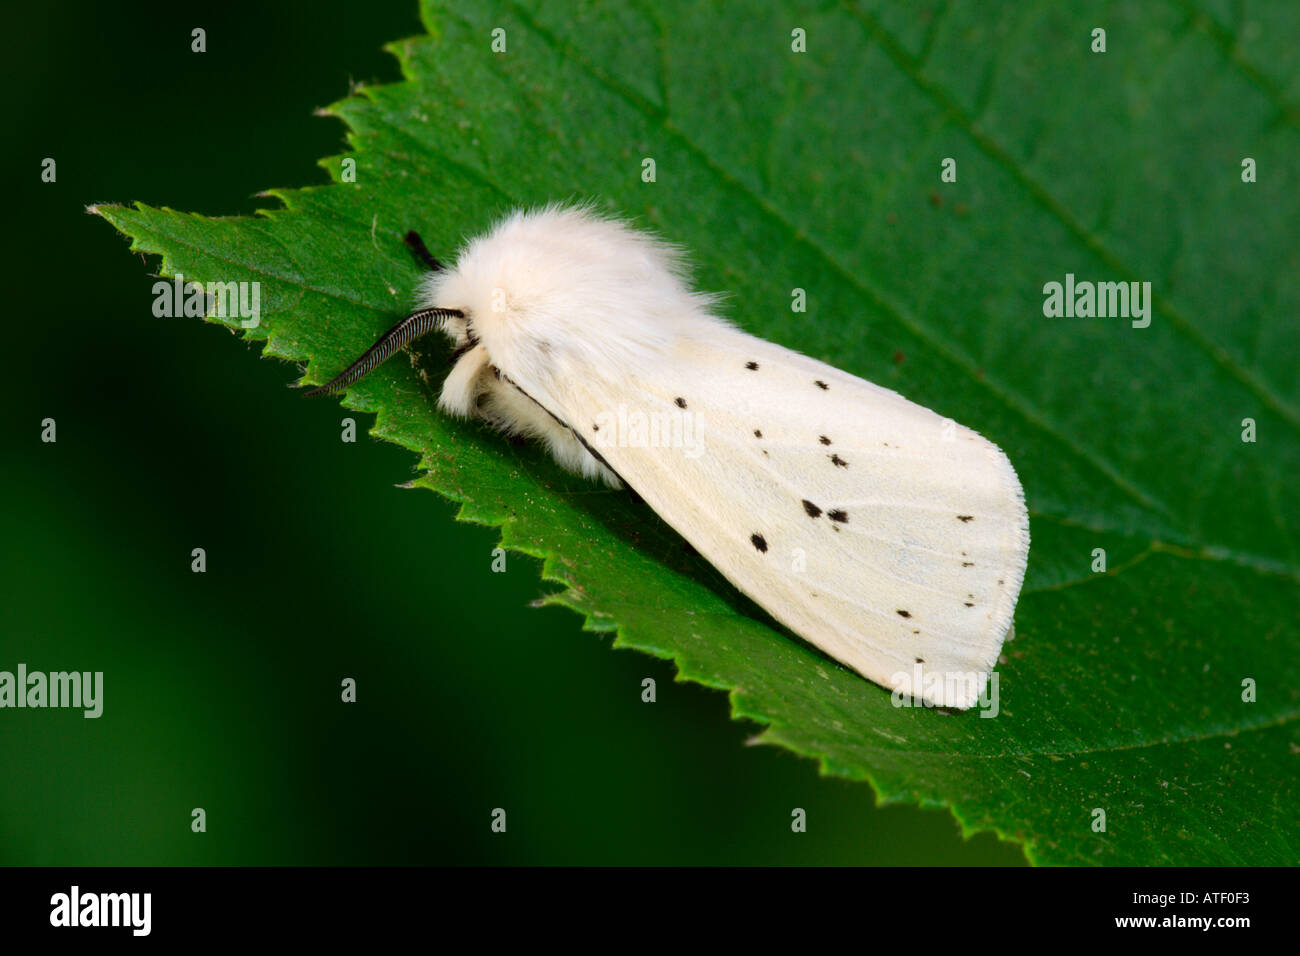 White Ermine Spilosoma lubricipeda at rest on leaf potton bedfordshire Stock Photo